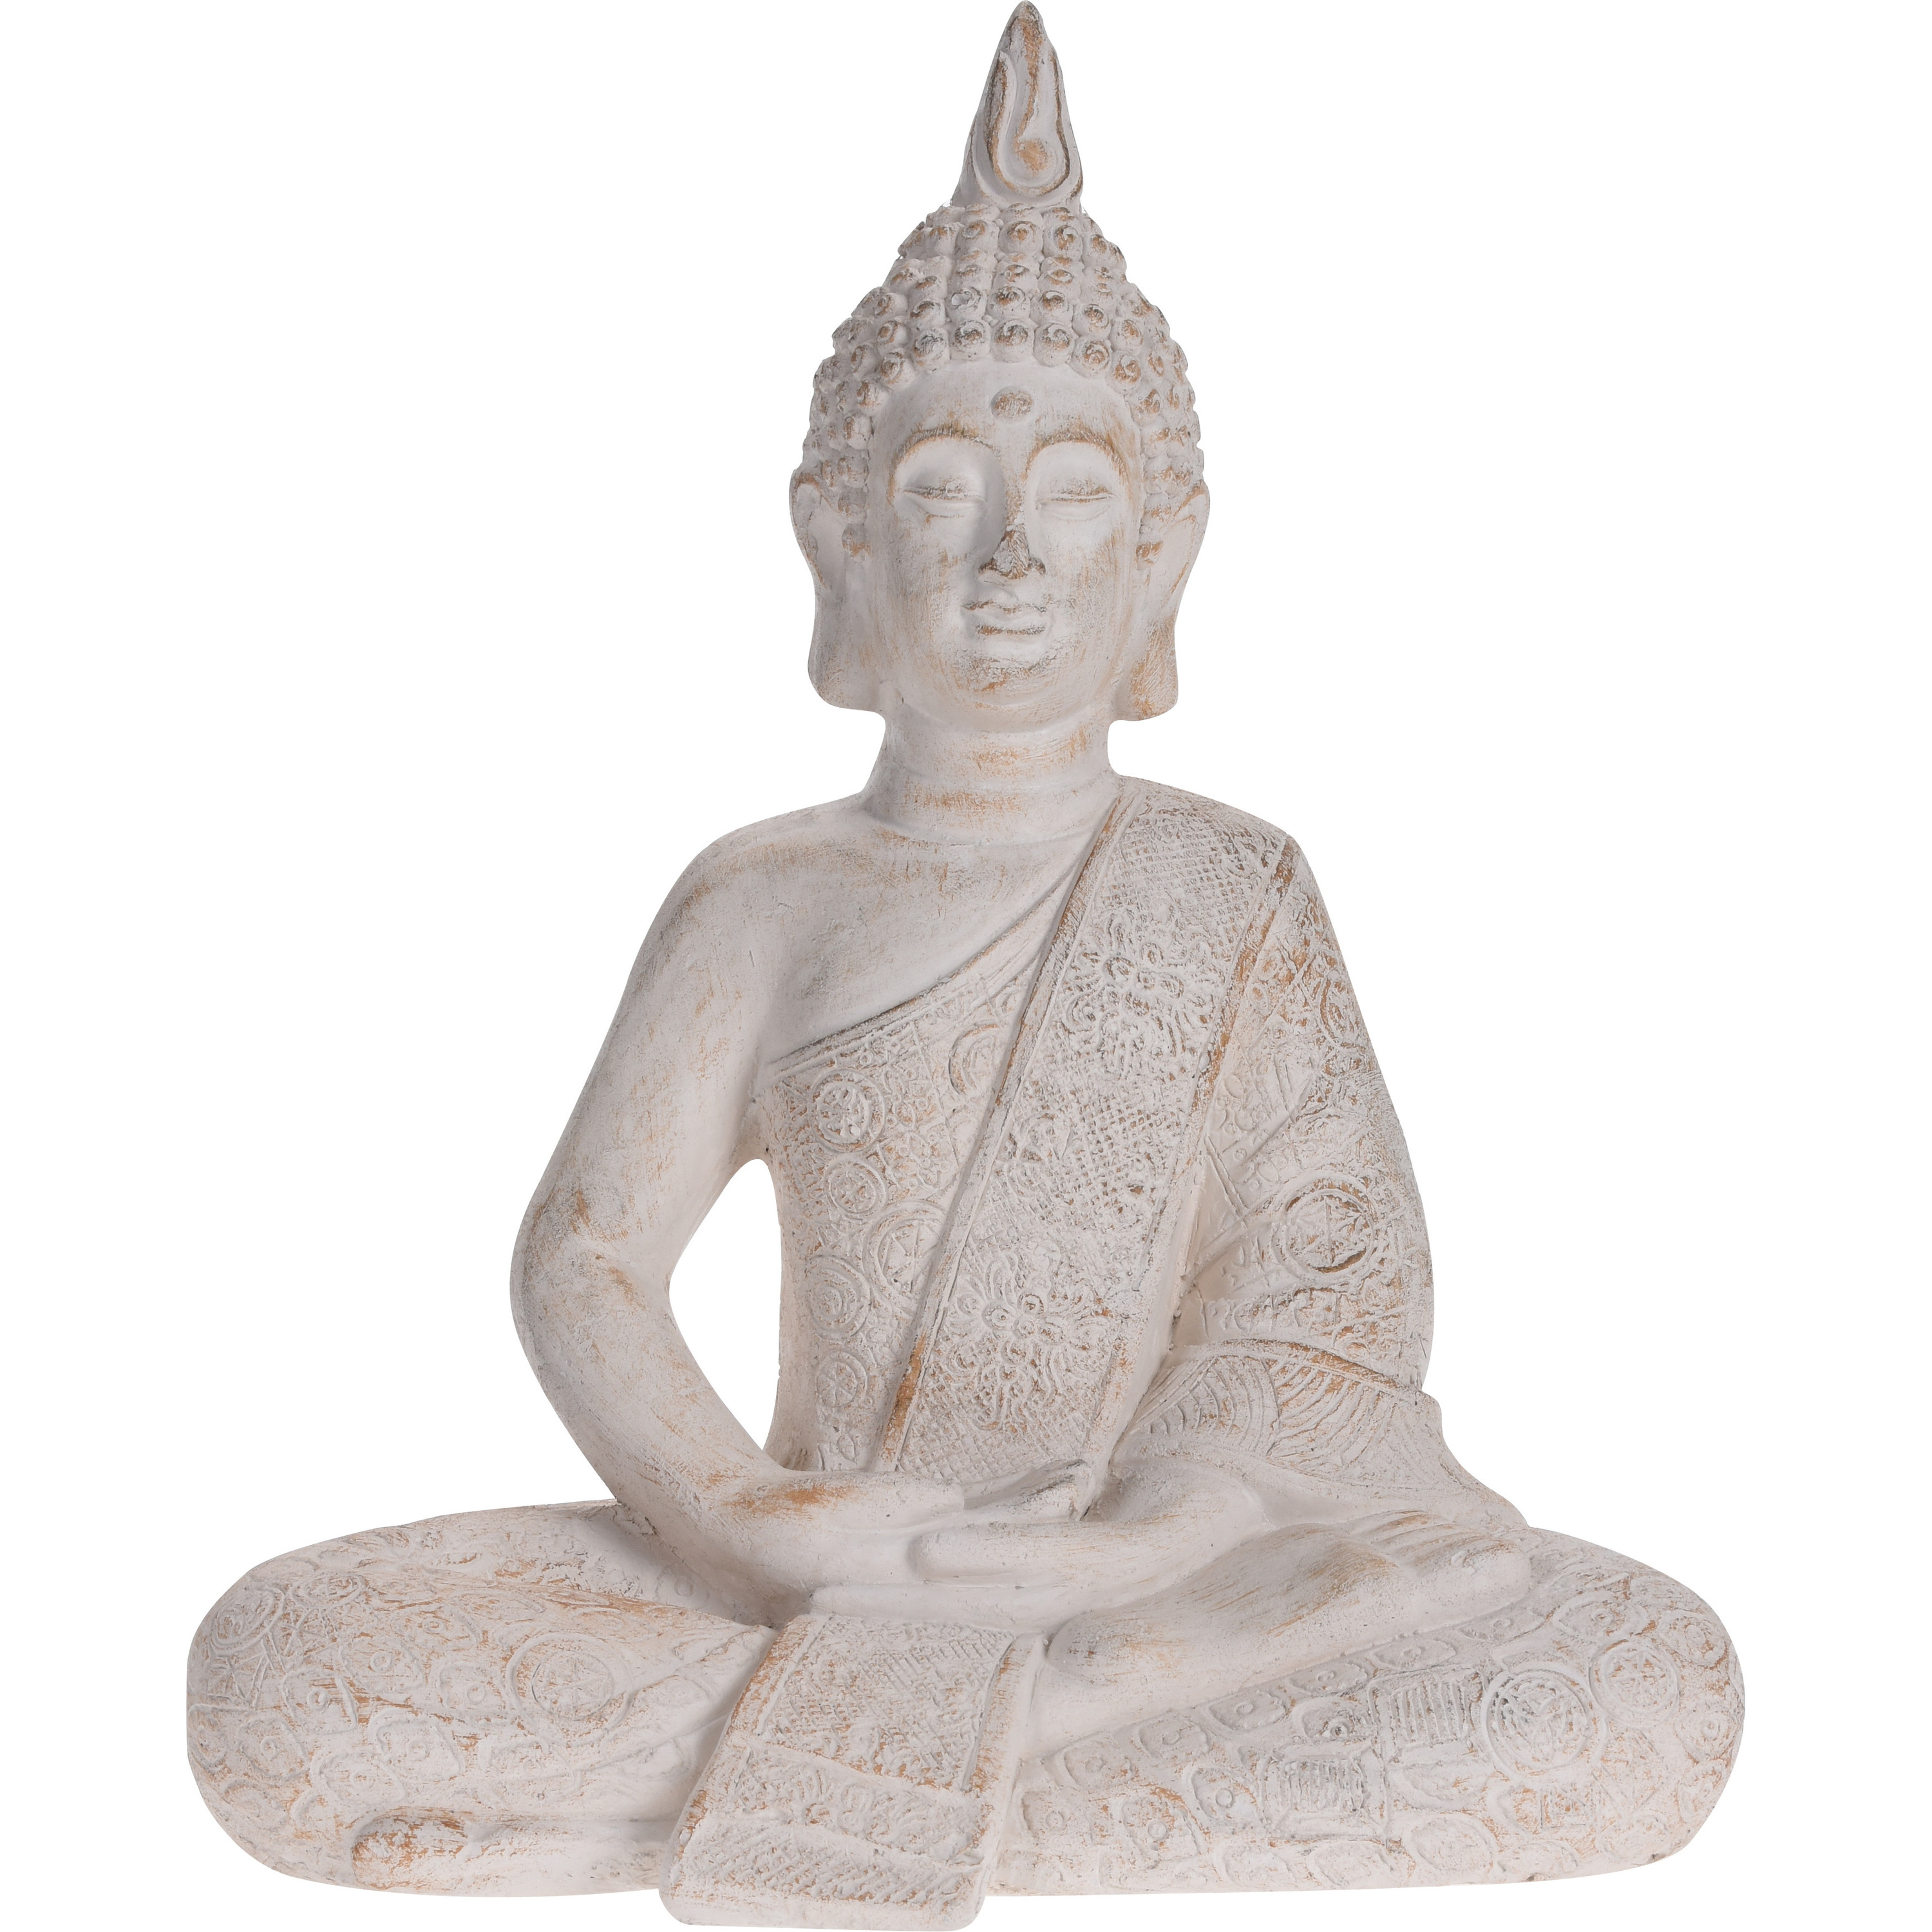 Zittend Boeddha tuinbeeld antiek creme 49 cm